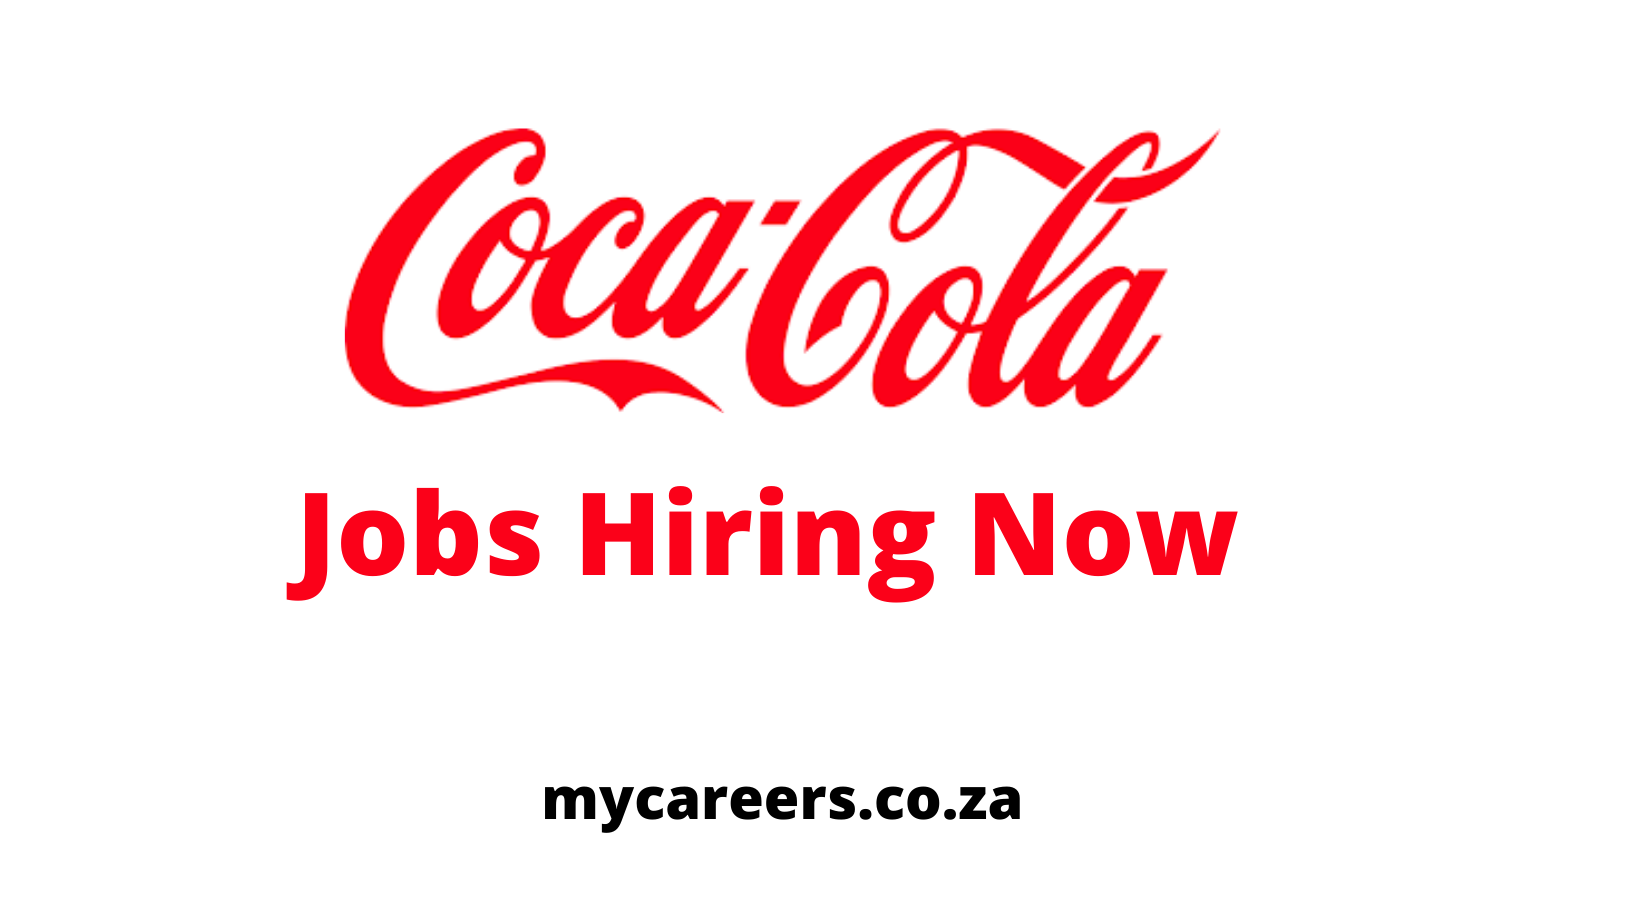 Coca Cola Jobs Hiring Now – Coca Cola South Africa Vacancies